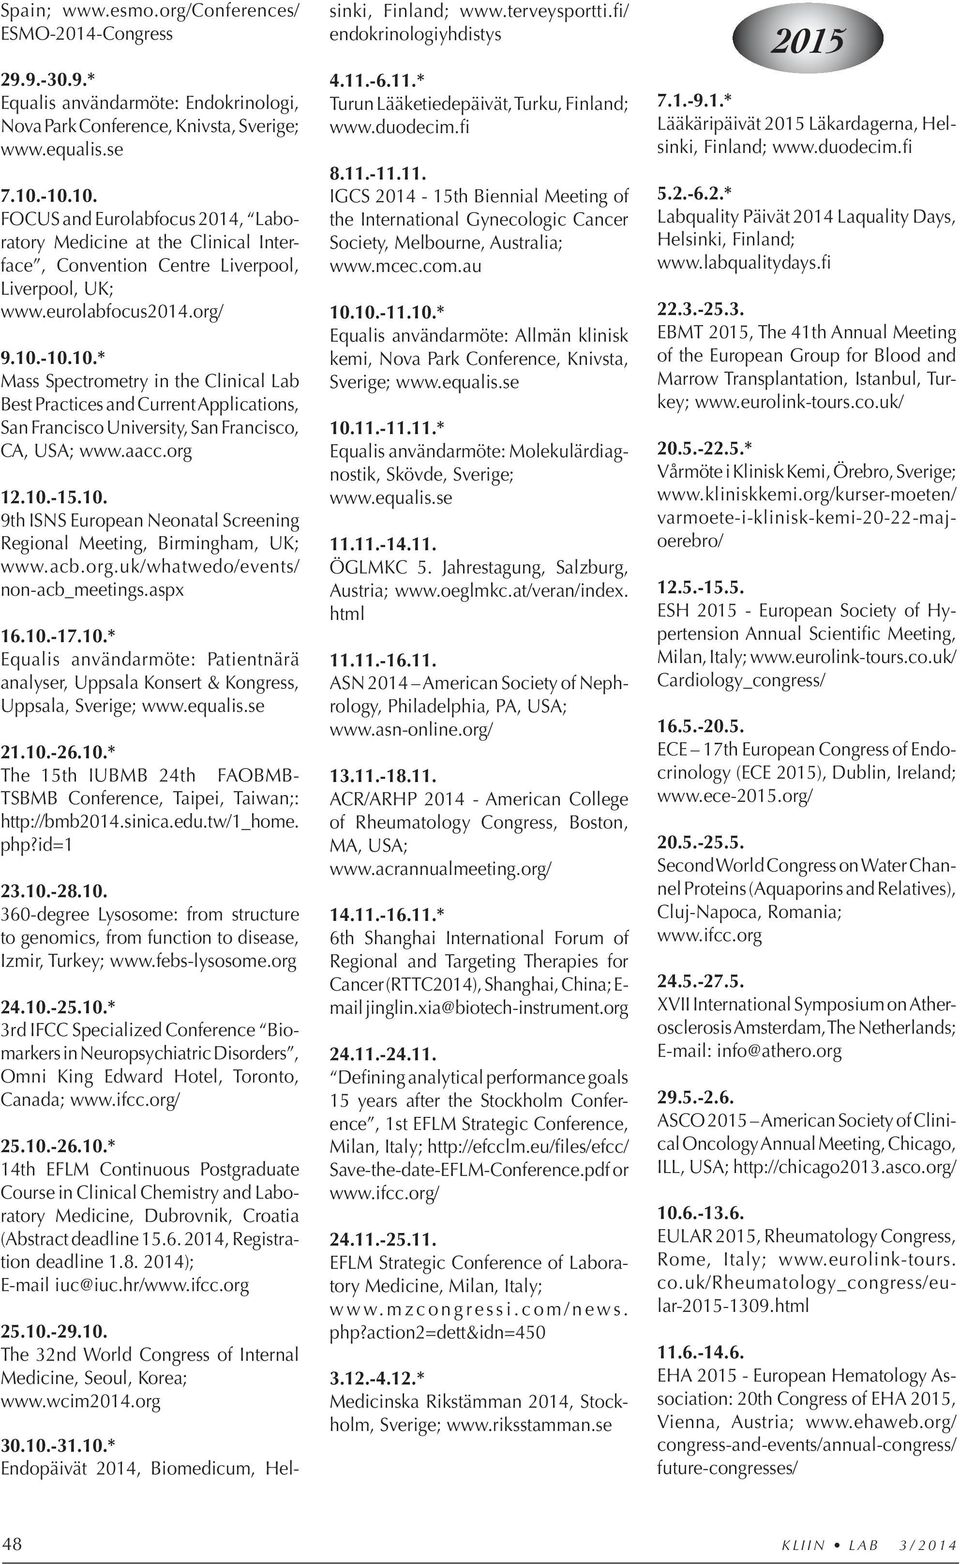 aacc.org 12.10.-15.10. 9th ISNS European Neonatal Screening Regional Meeting, Birmingham, UK; www.acb.org.uk/whatwedo/events/ non-acb_meetings.aspx 16.10.-17.10.* Equalis användarmöte: Patientnärä analyser, Uppsala Konsert & Kongress, Uppsala, Sverige; www.